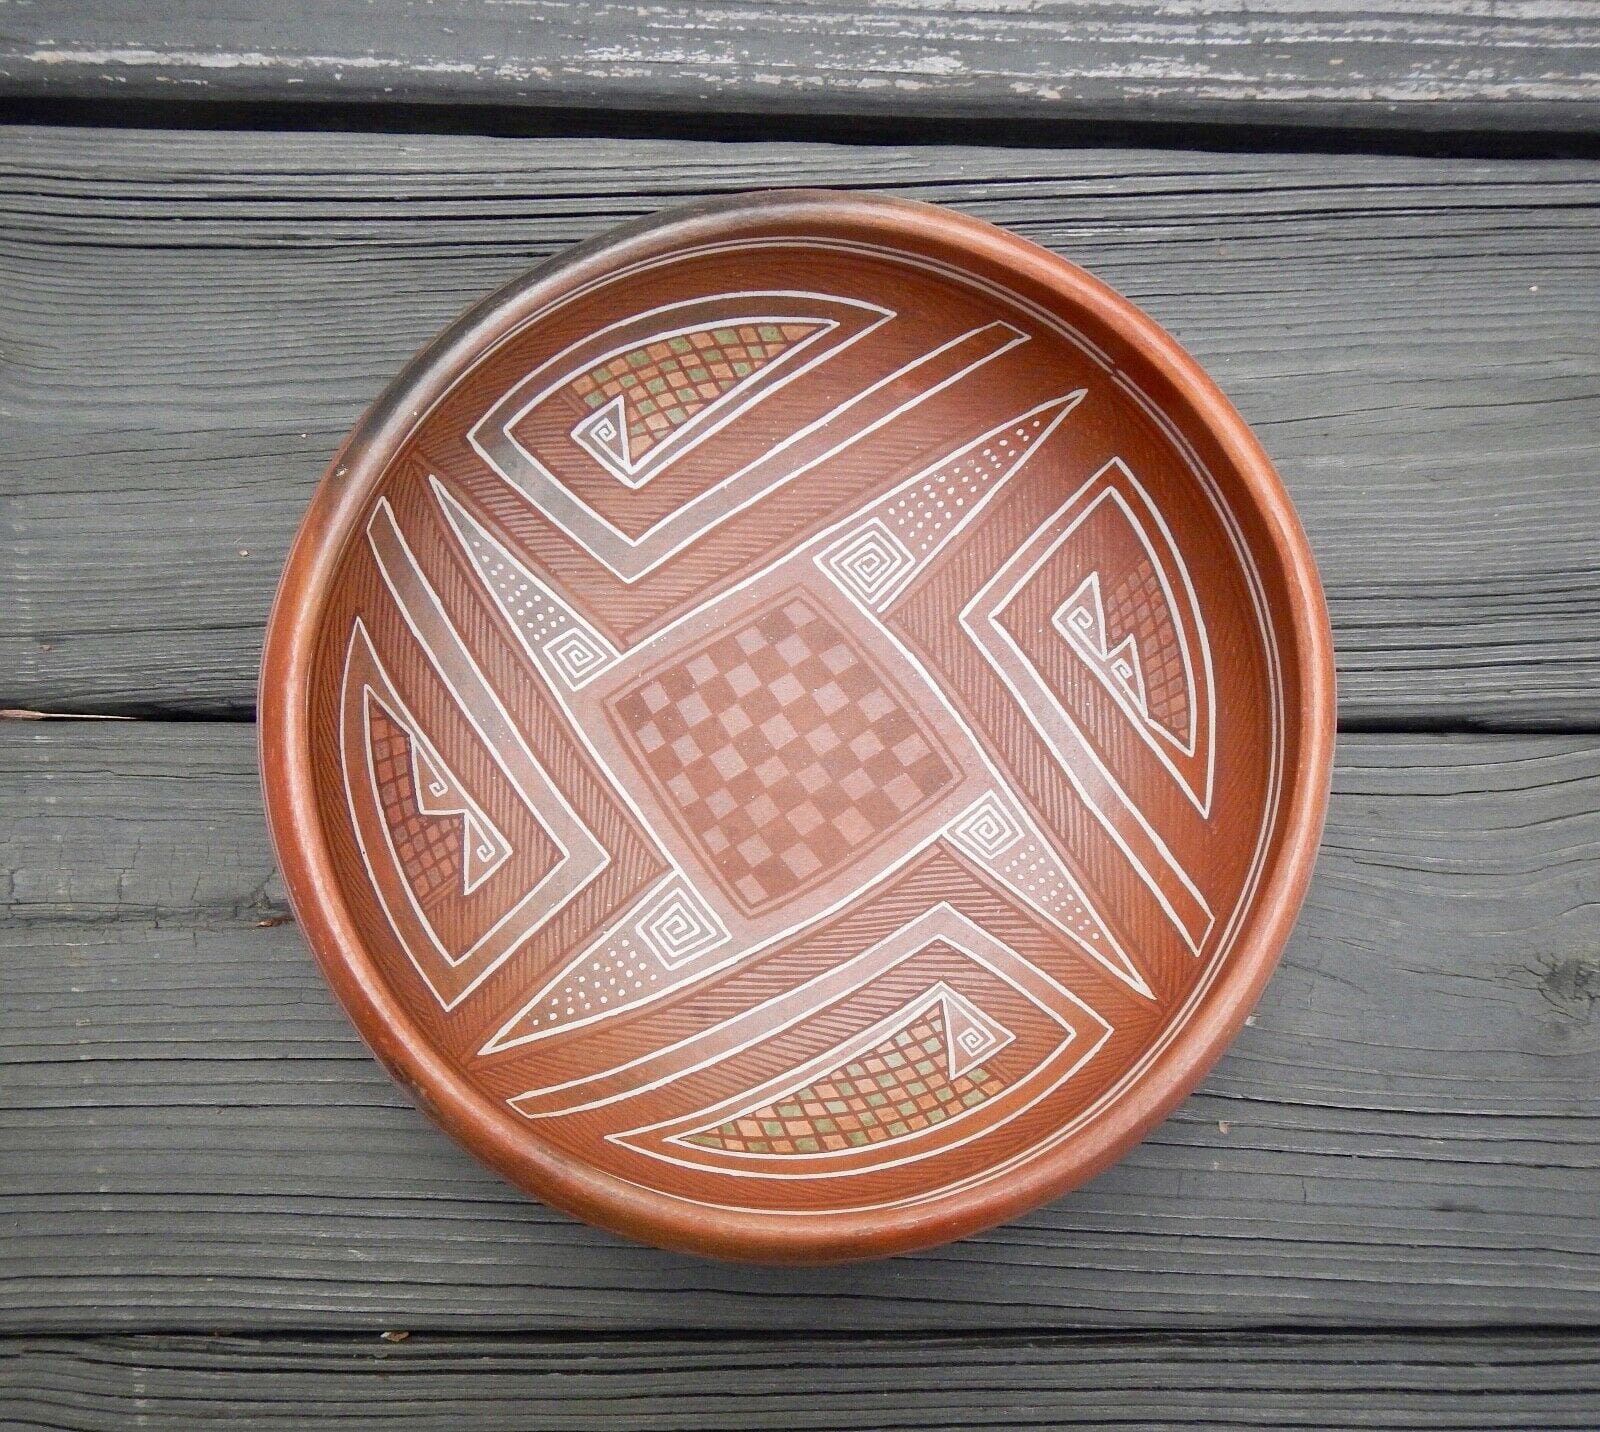 2019-24 Modern Anasazi-inspired bowl